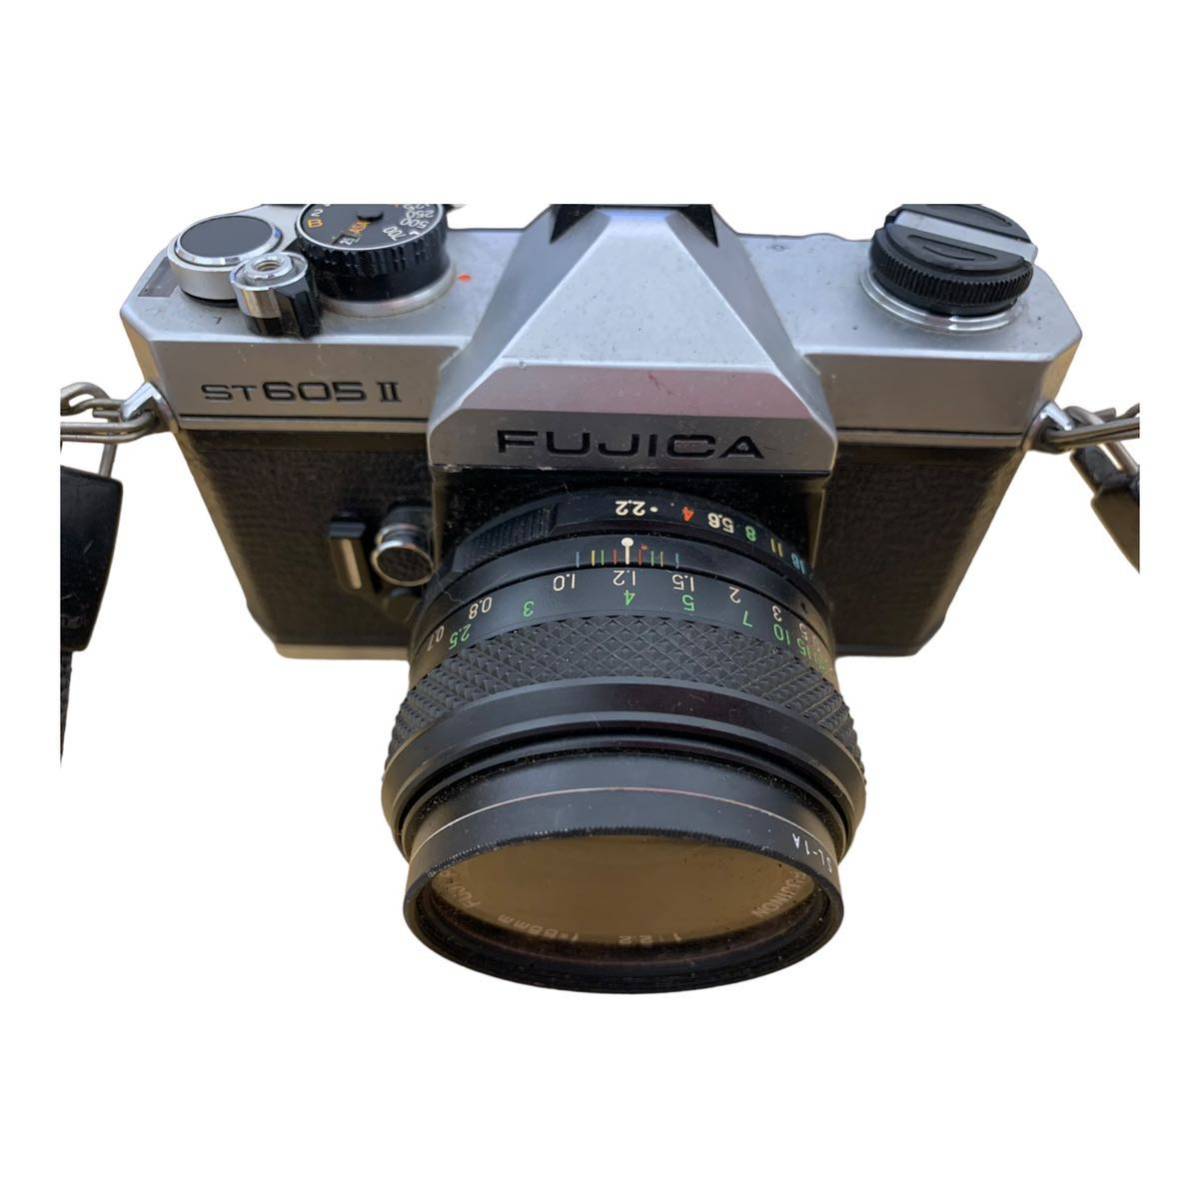 【6350】FUJICA フジカ 富士フィルム ST605Ⅱ 一眼レフフイルムカメラ SBC FUJINON-W 1:2.2 55mm 動作未確認_画像2